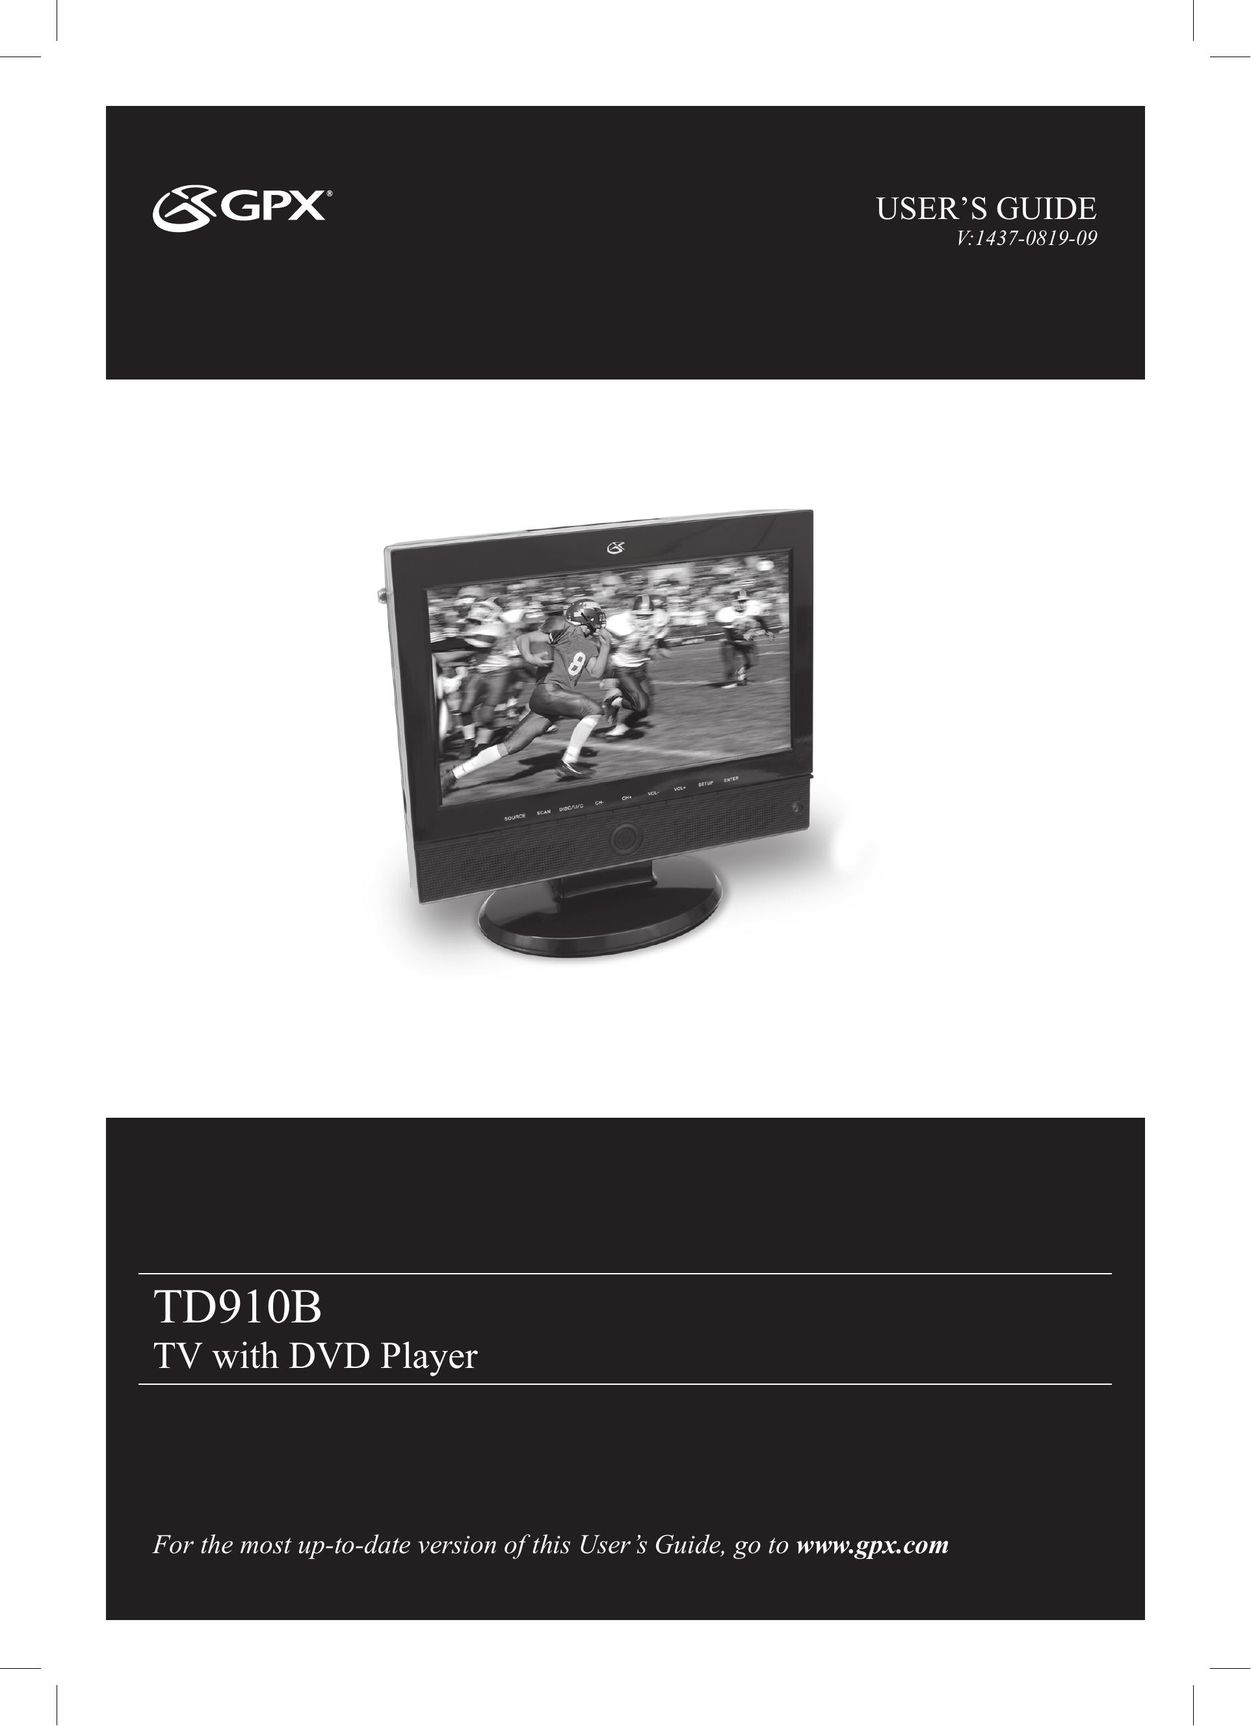 GPX TD910B TV DVD Combo User Manual